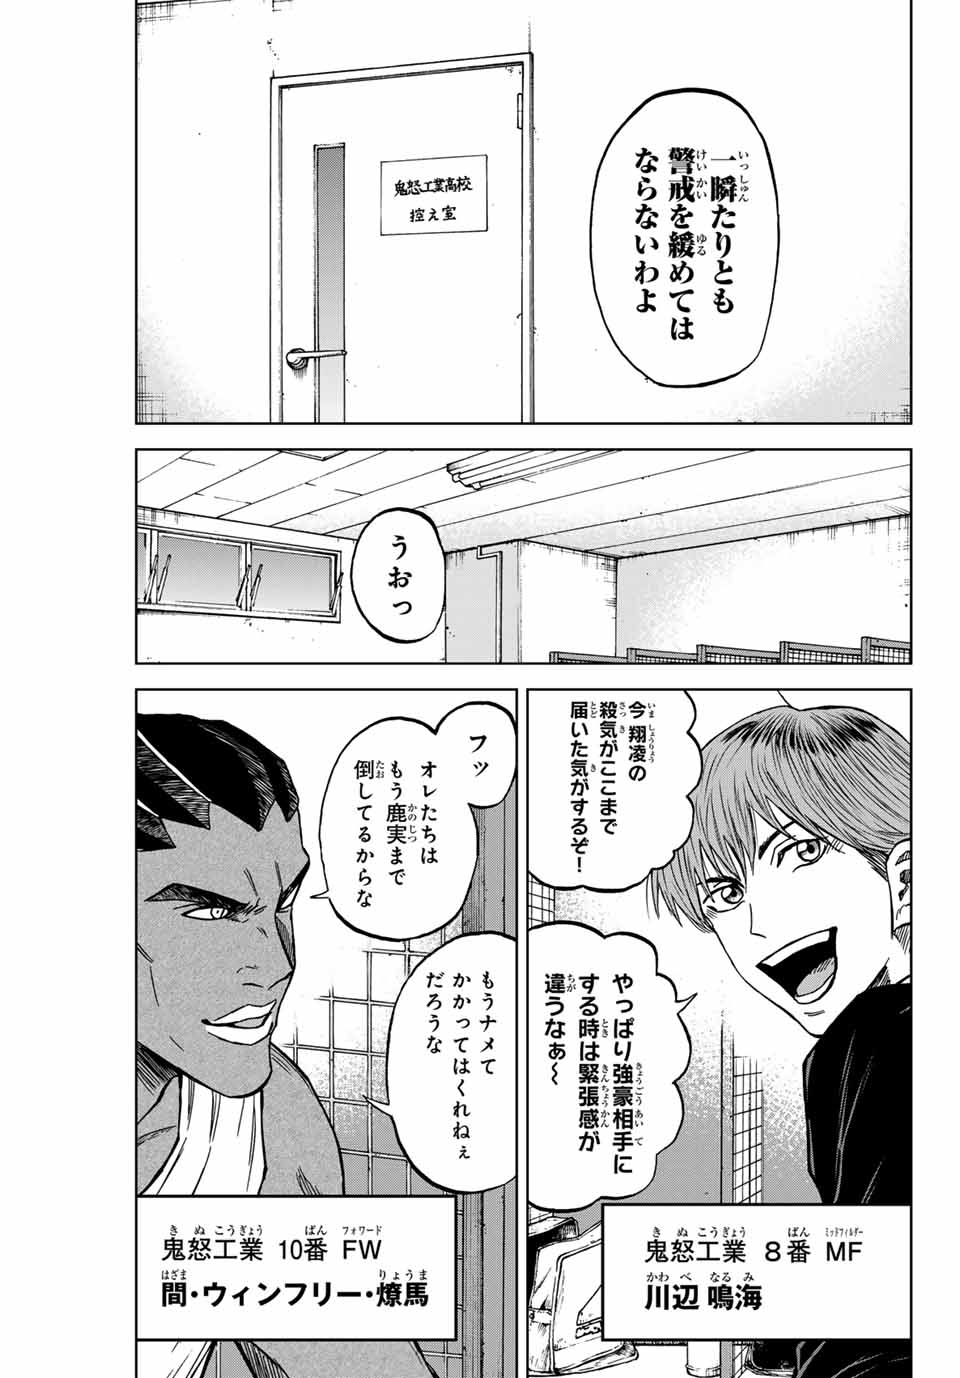 Aoku Somero - Chapter 118 - Page 5